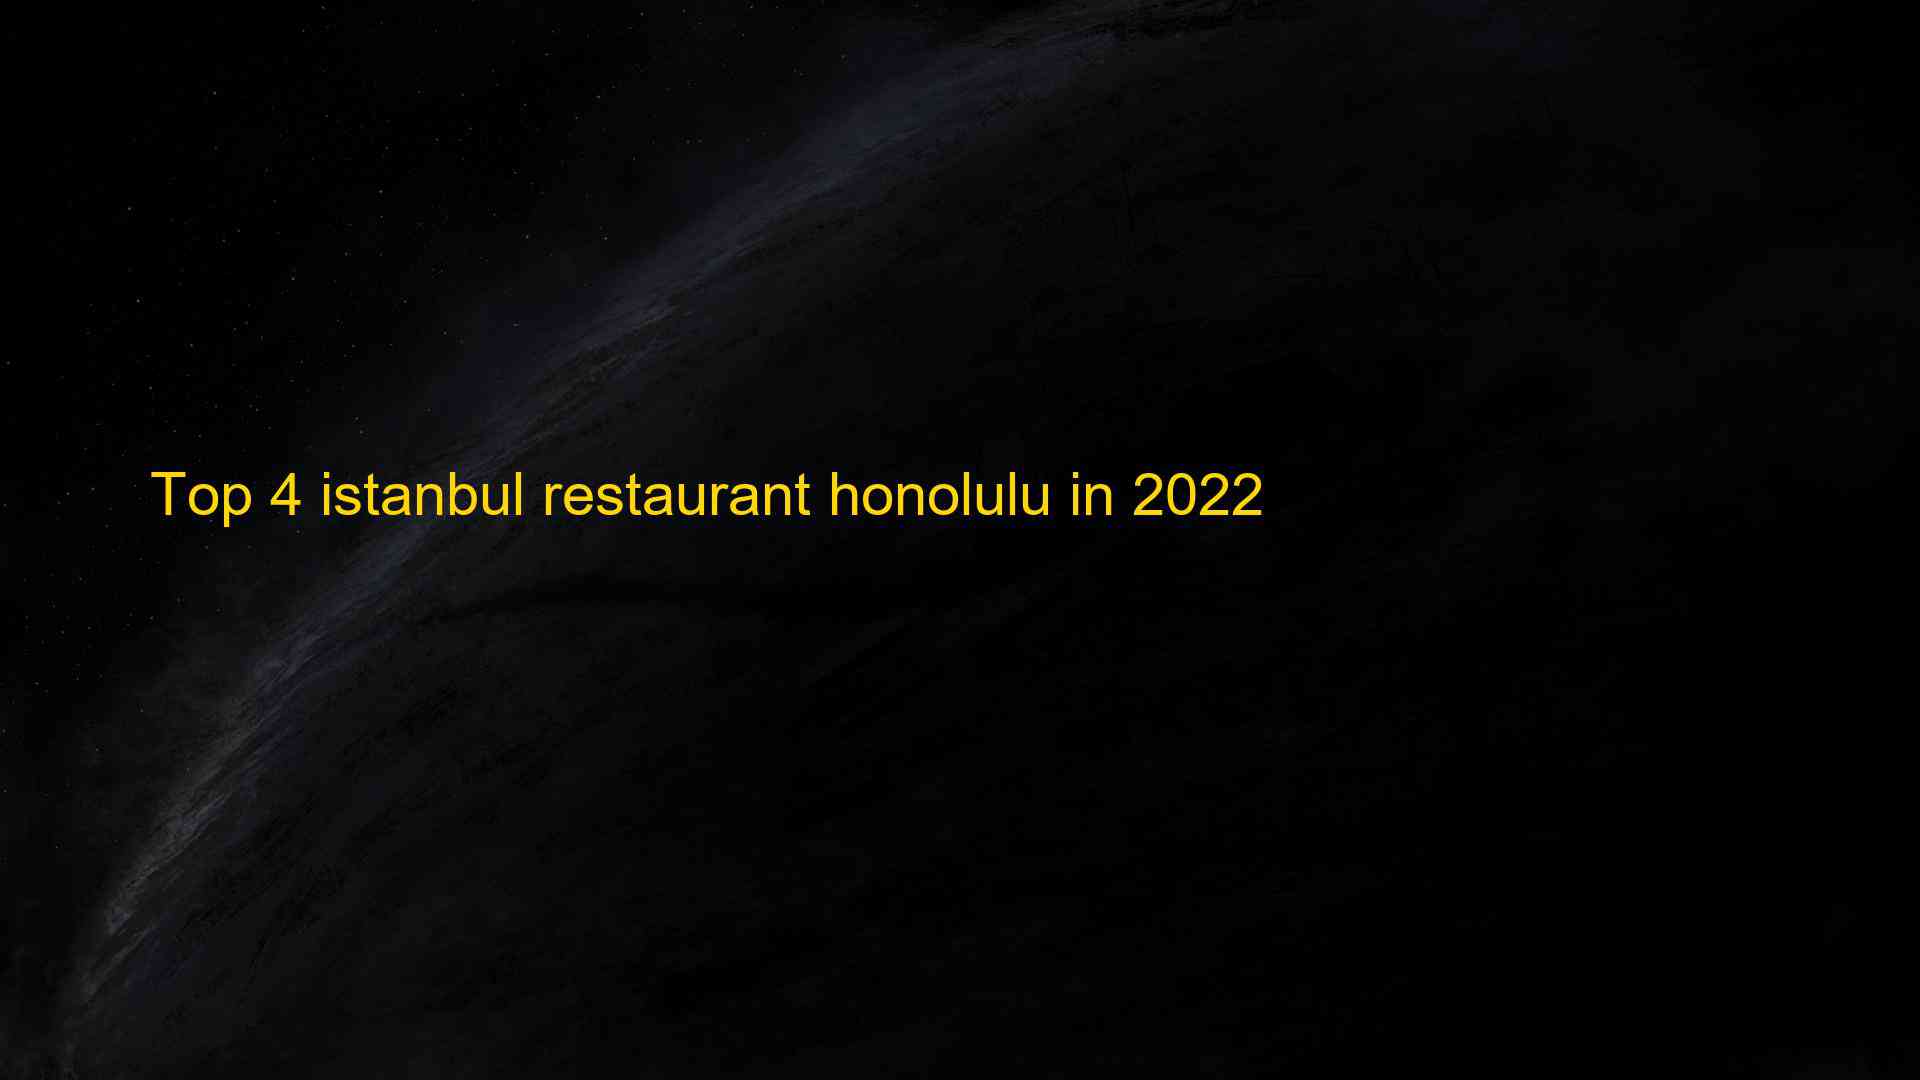 Top 4 istanbul restaurant honolulu in 2022 1663174984